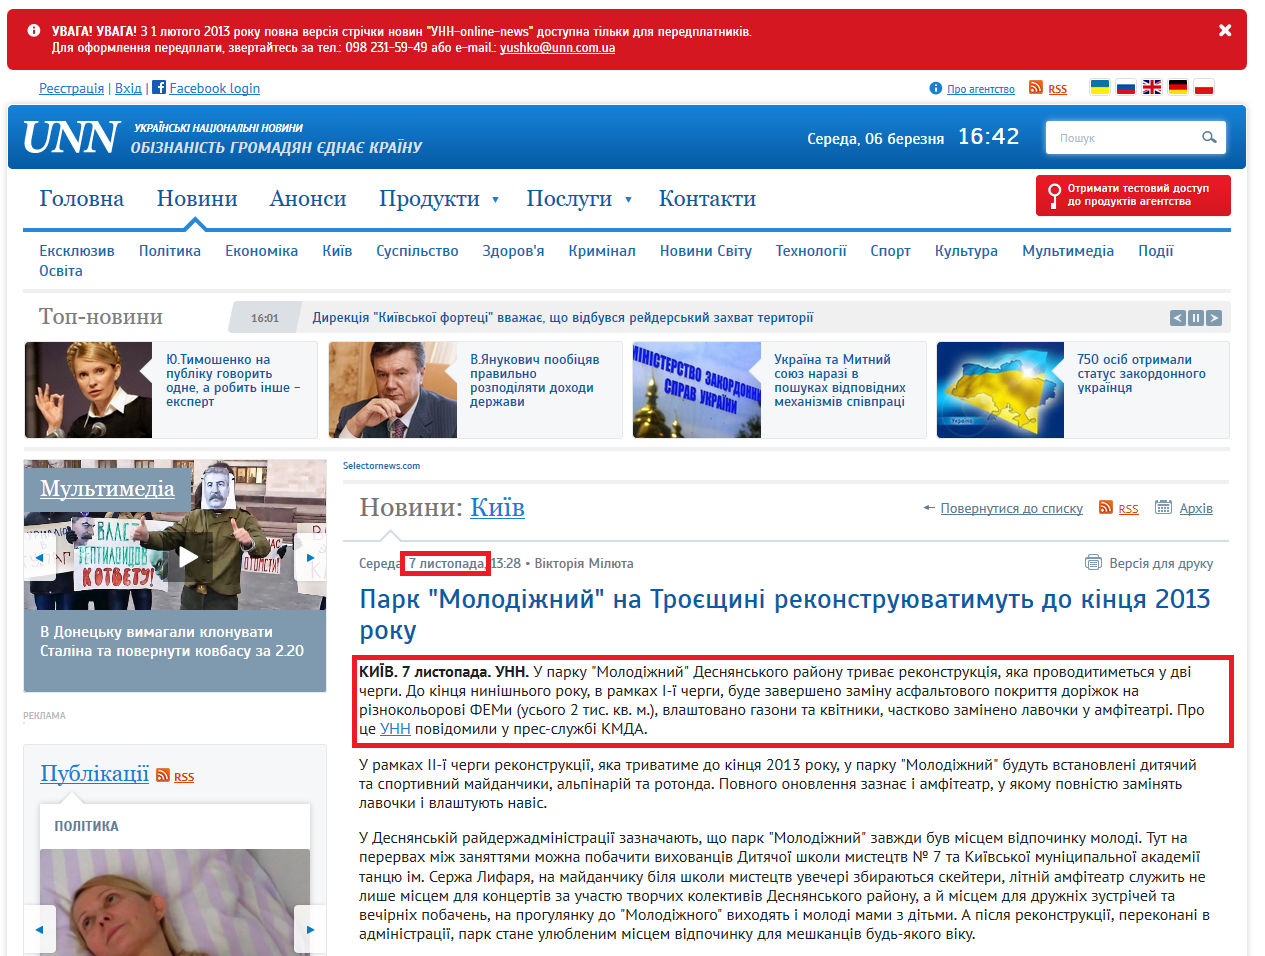 http://www.unn.com.ua/uk/news/1016683-park-molodigeniy-na-troeschini-rekonstruyuvatimut-do-kintsya-2013-roku